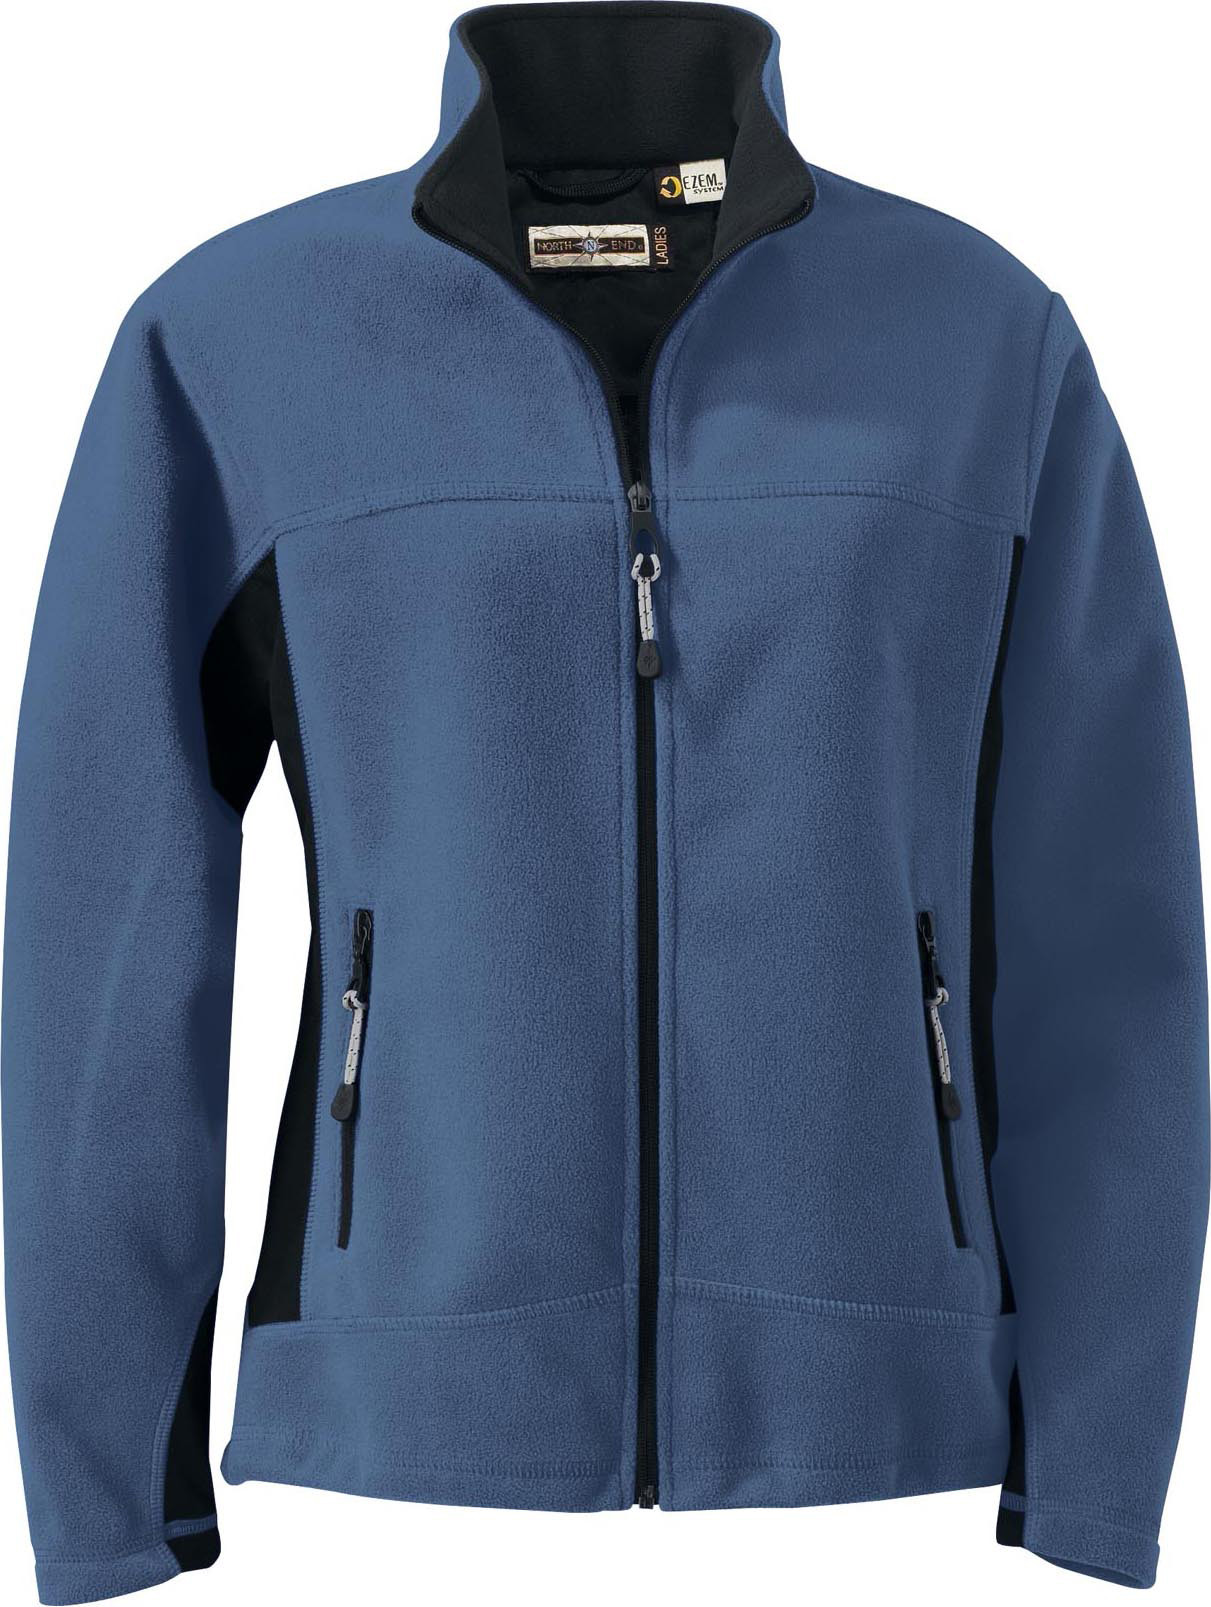 Ash City Bonded Fleece 78036 - Ladies' Fleece Bonded To Brushed Mesh Full-Zip Jacket